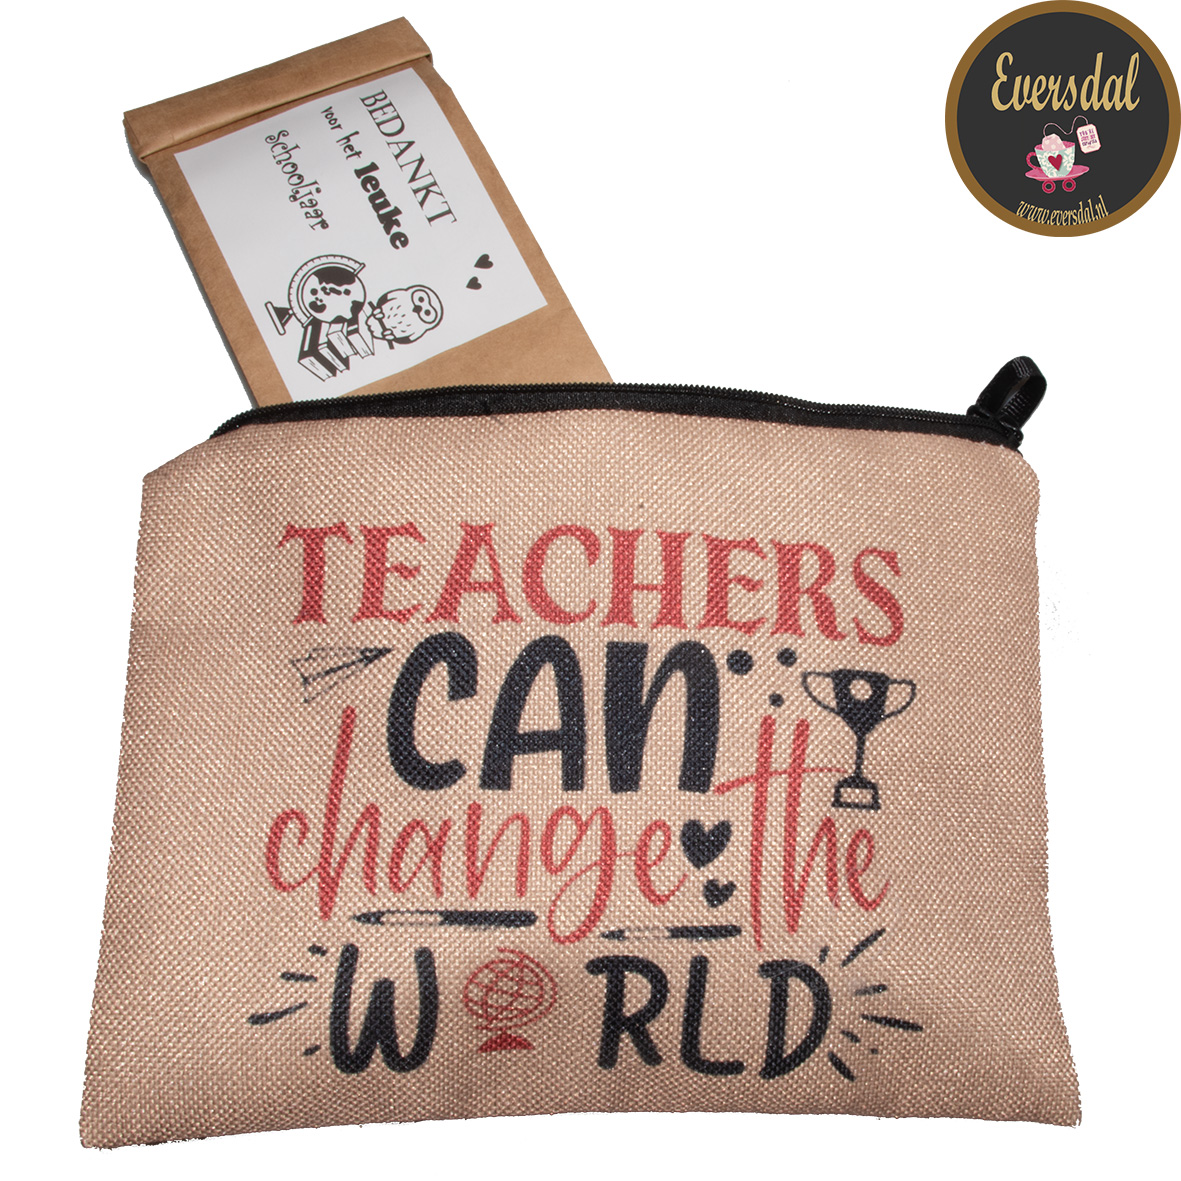 Teachers can change the world!